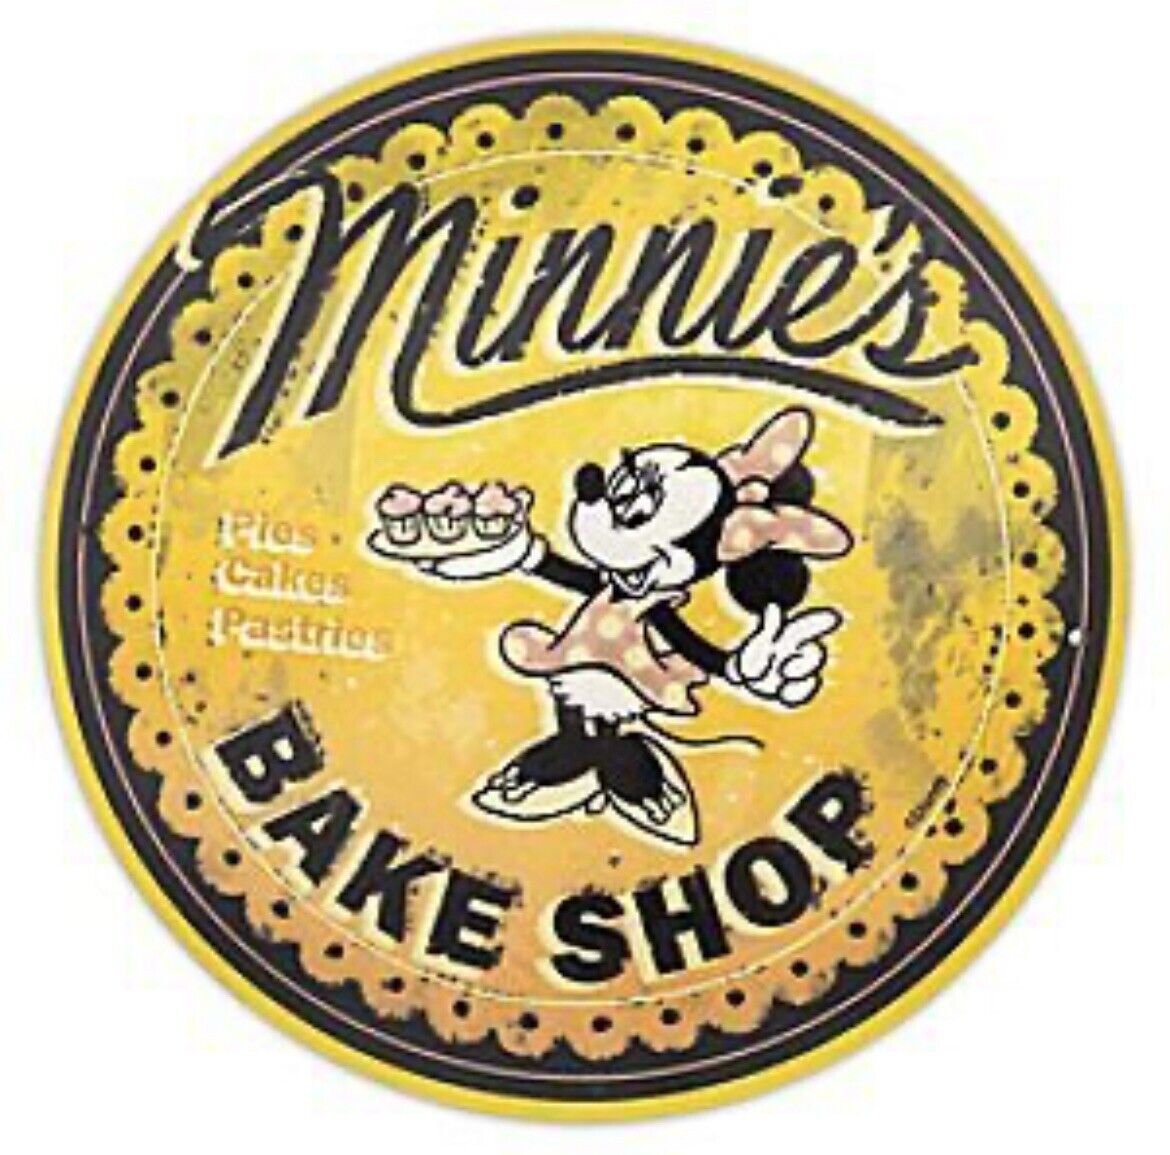 Vintage Disney wall plaque — Minnie’s Bake Shop Solid Wood